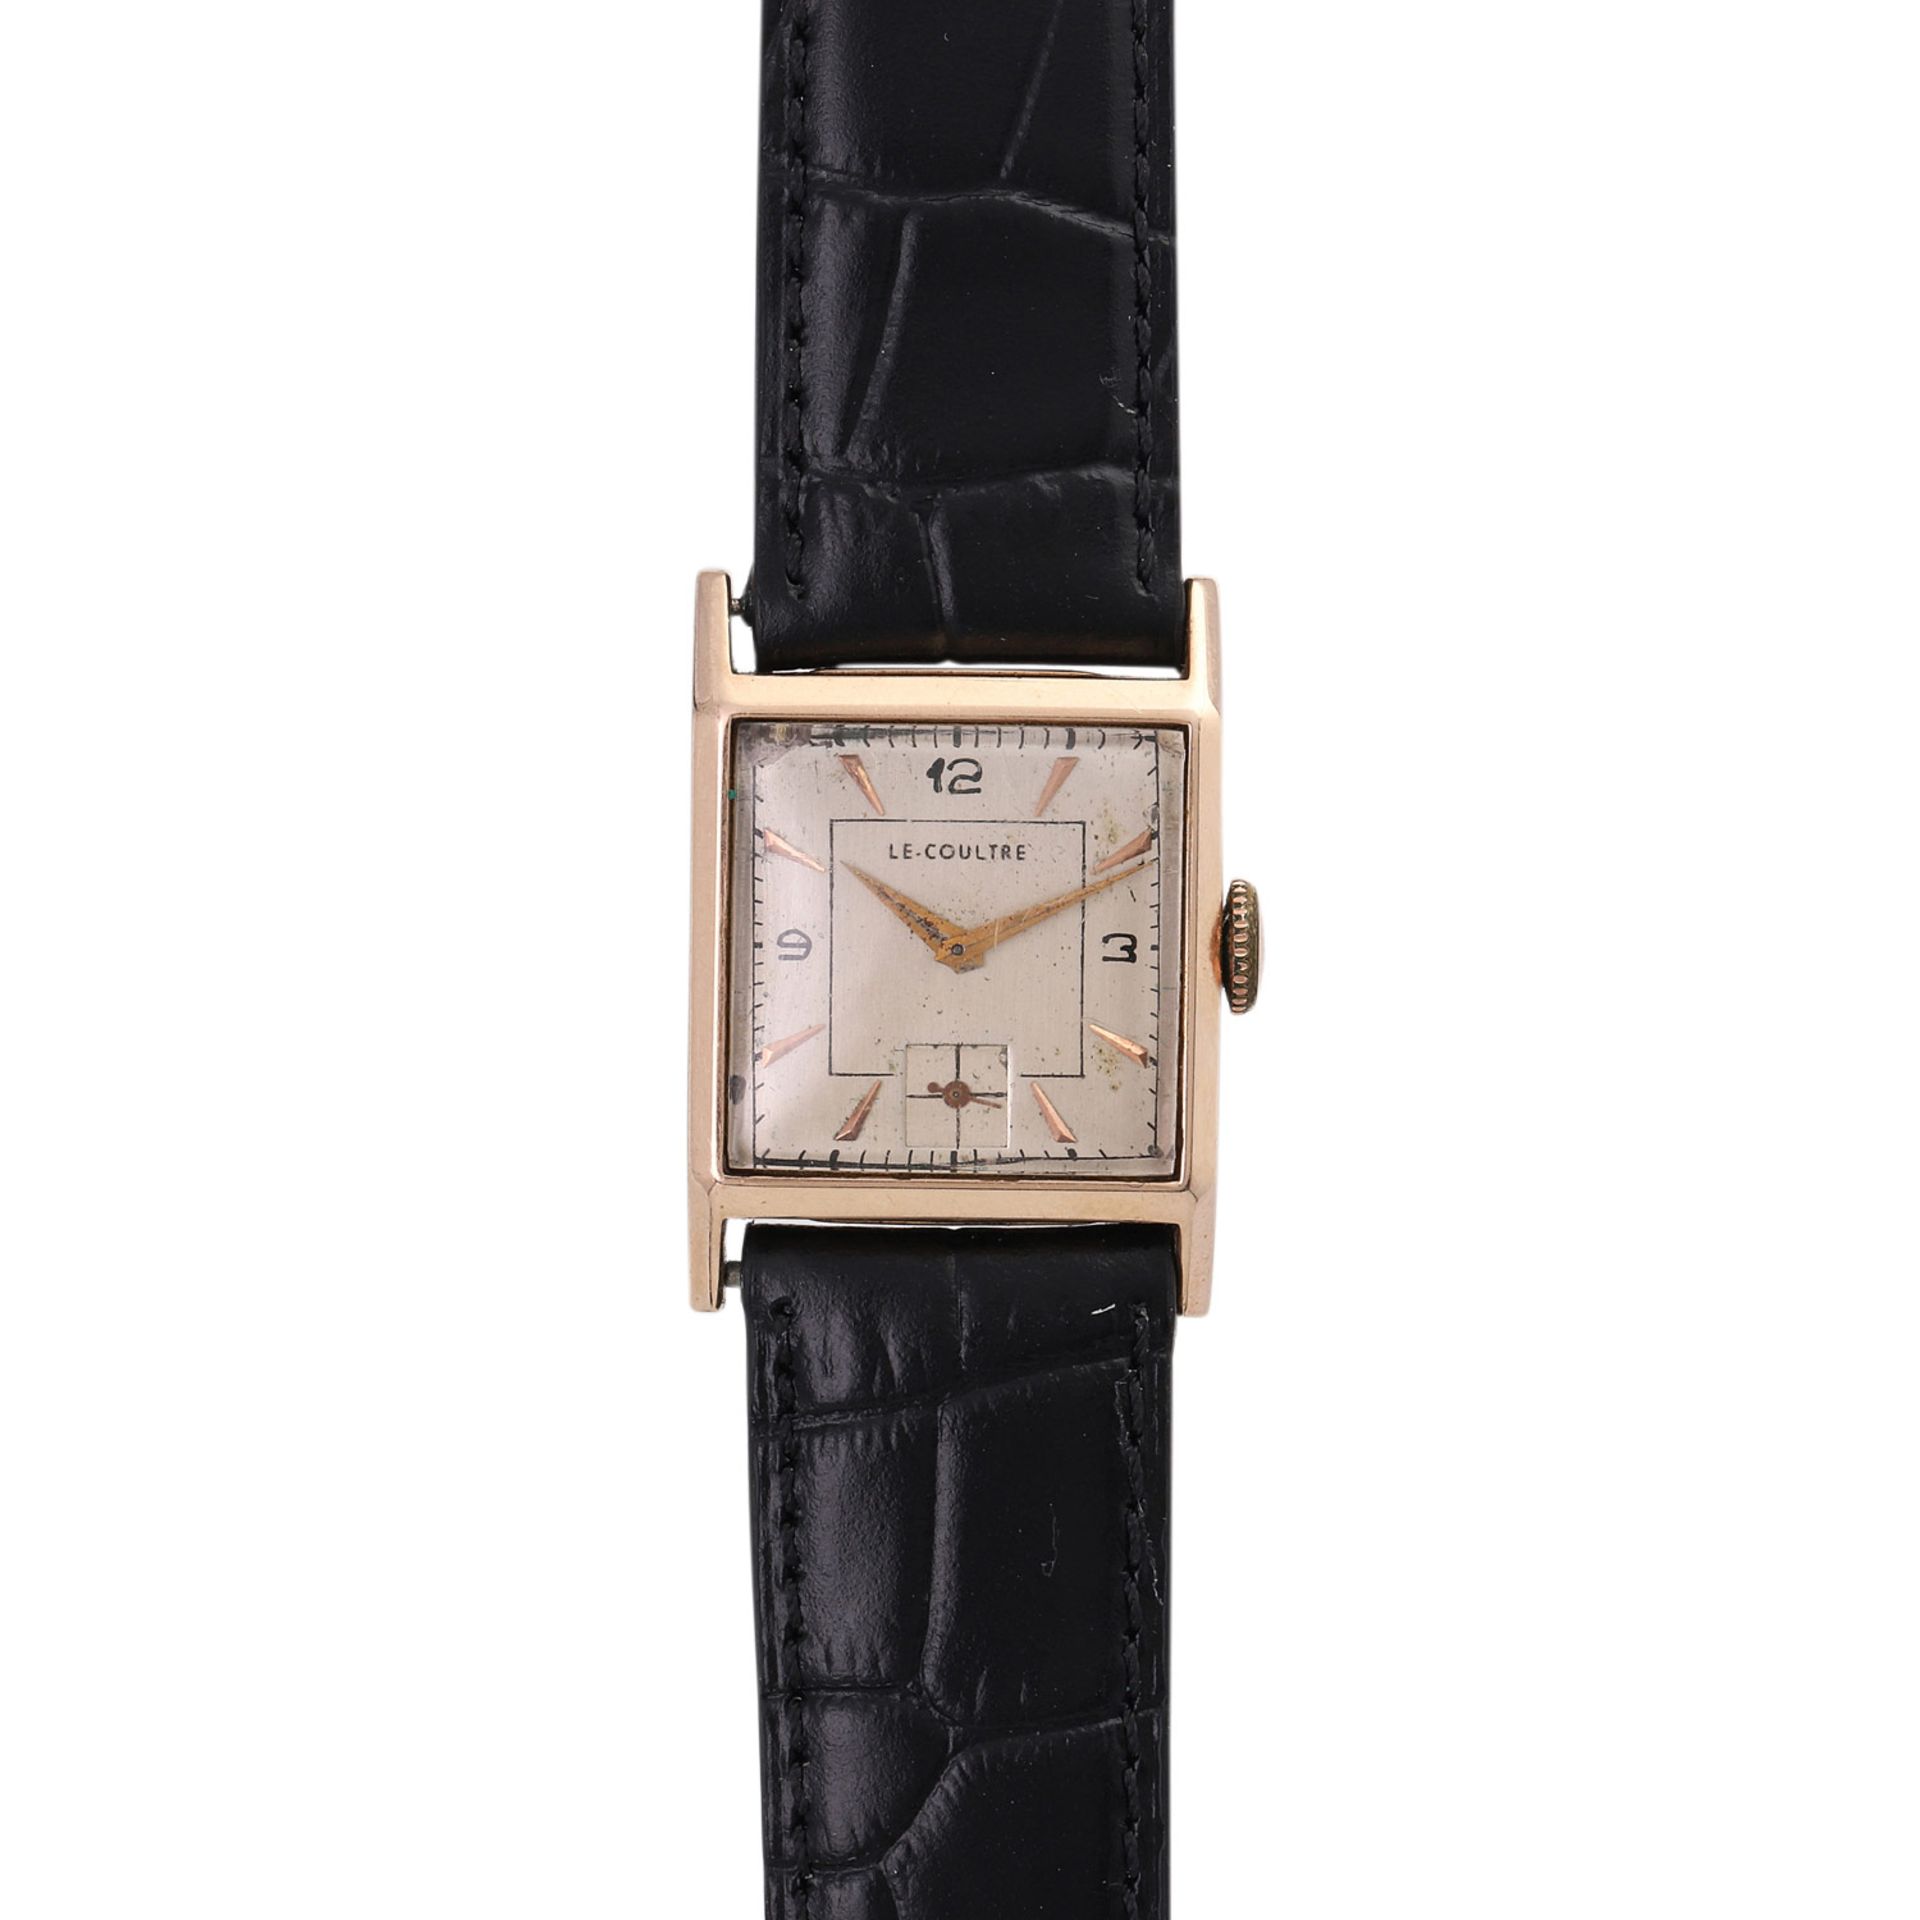 LE COULTRE Vintage Armbanduhr, ca. 1940/50er Jahre. Gold 14K.Handaufzugwerk, Cal. 428. Werk-Nr.